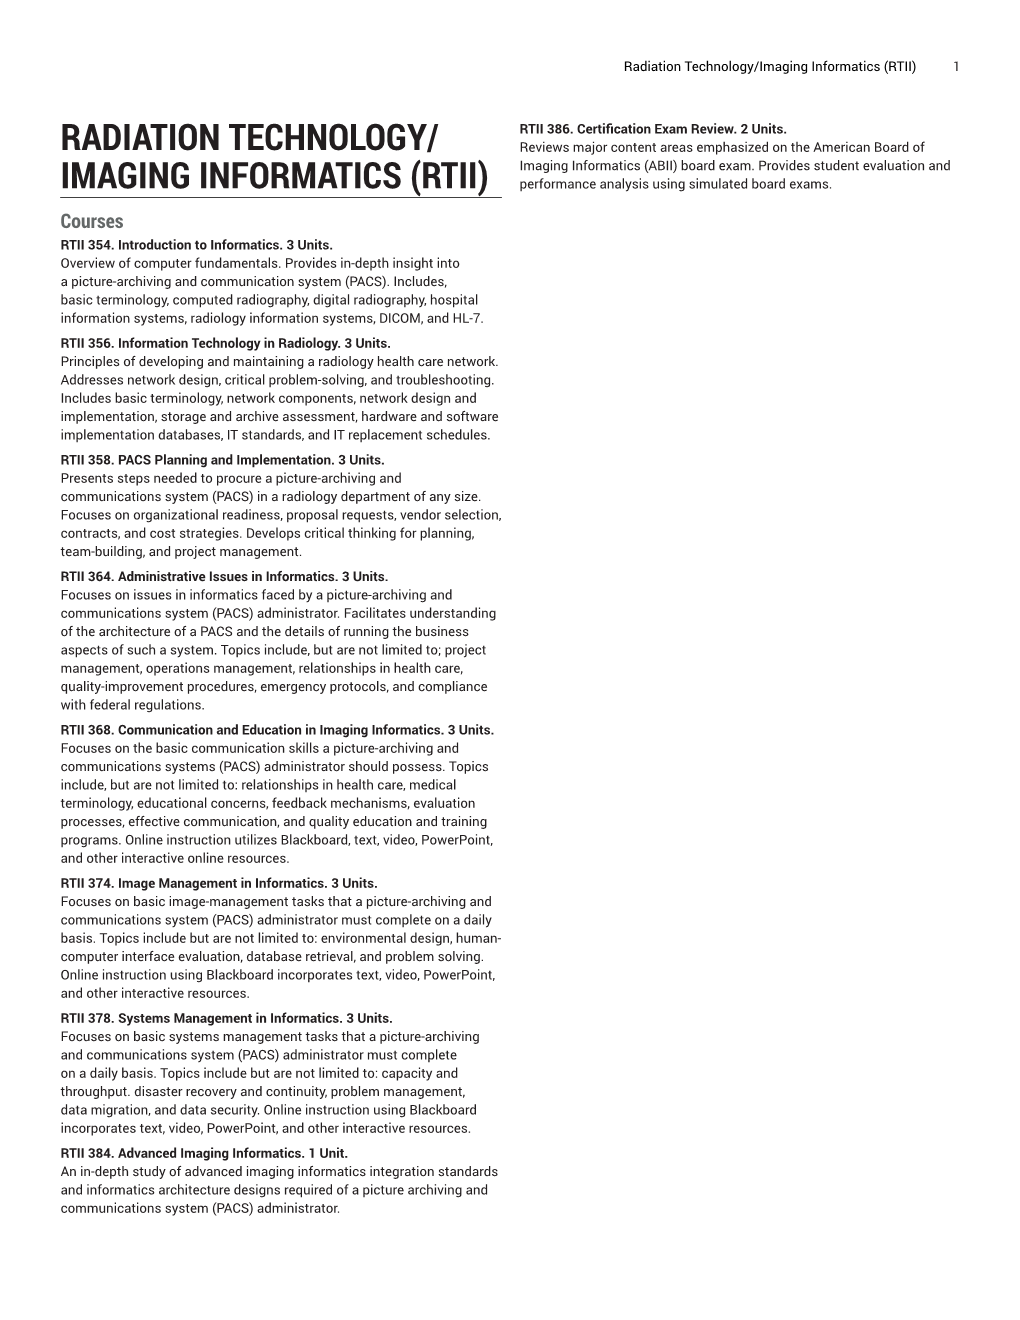 Radiation Technology/Imaging Informatics (RTII) 1